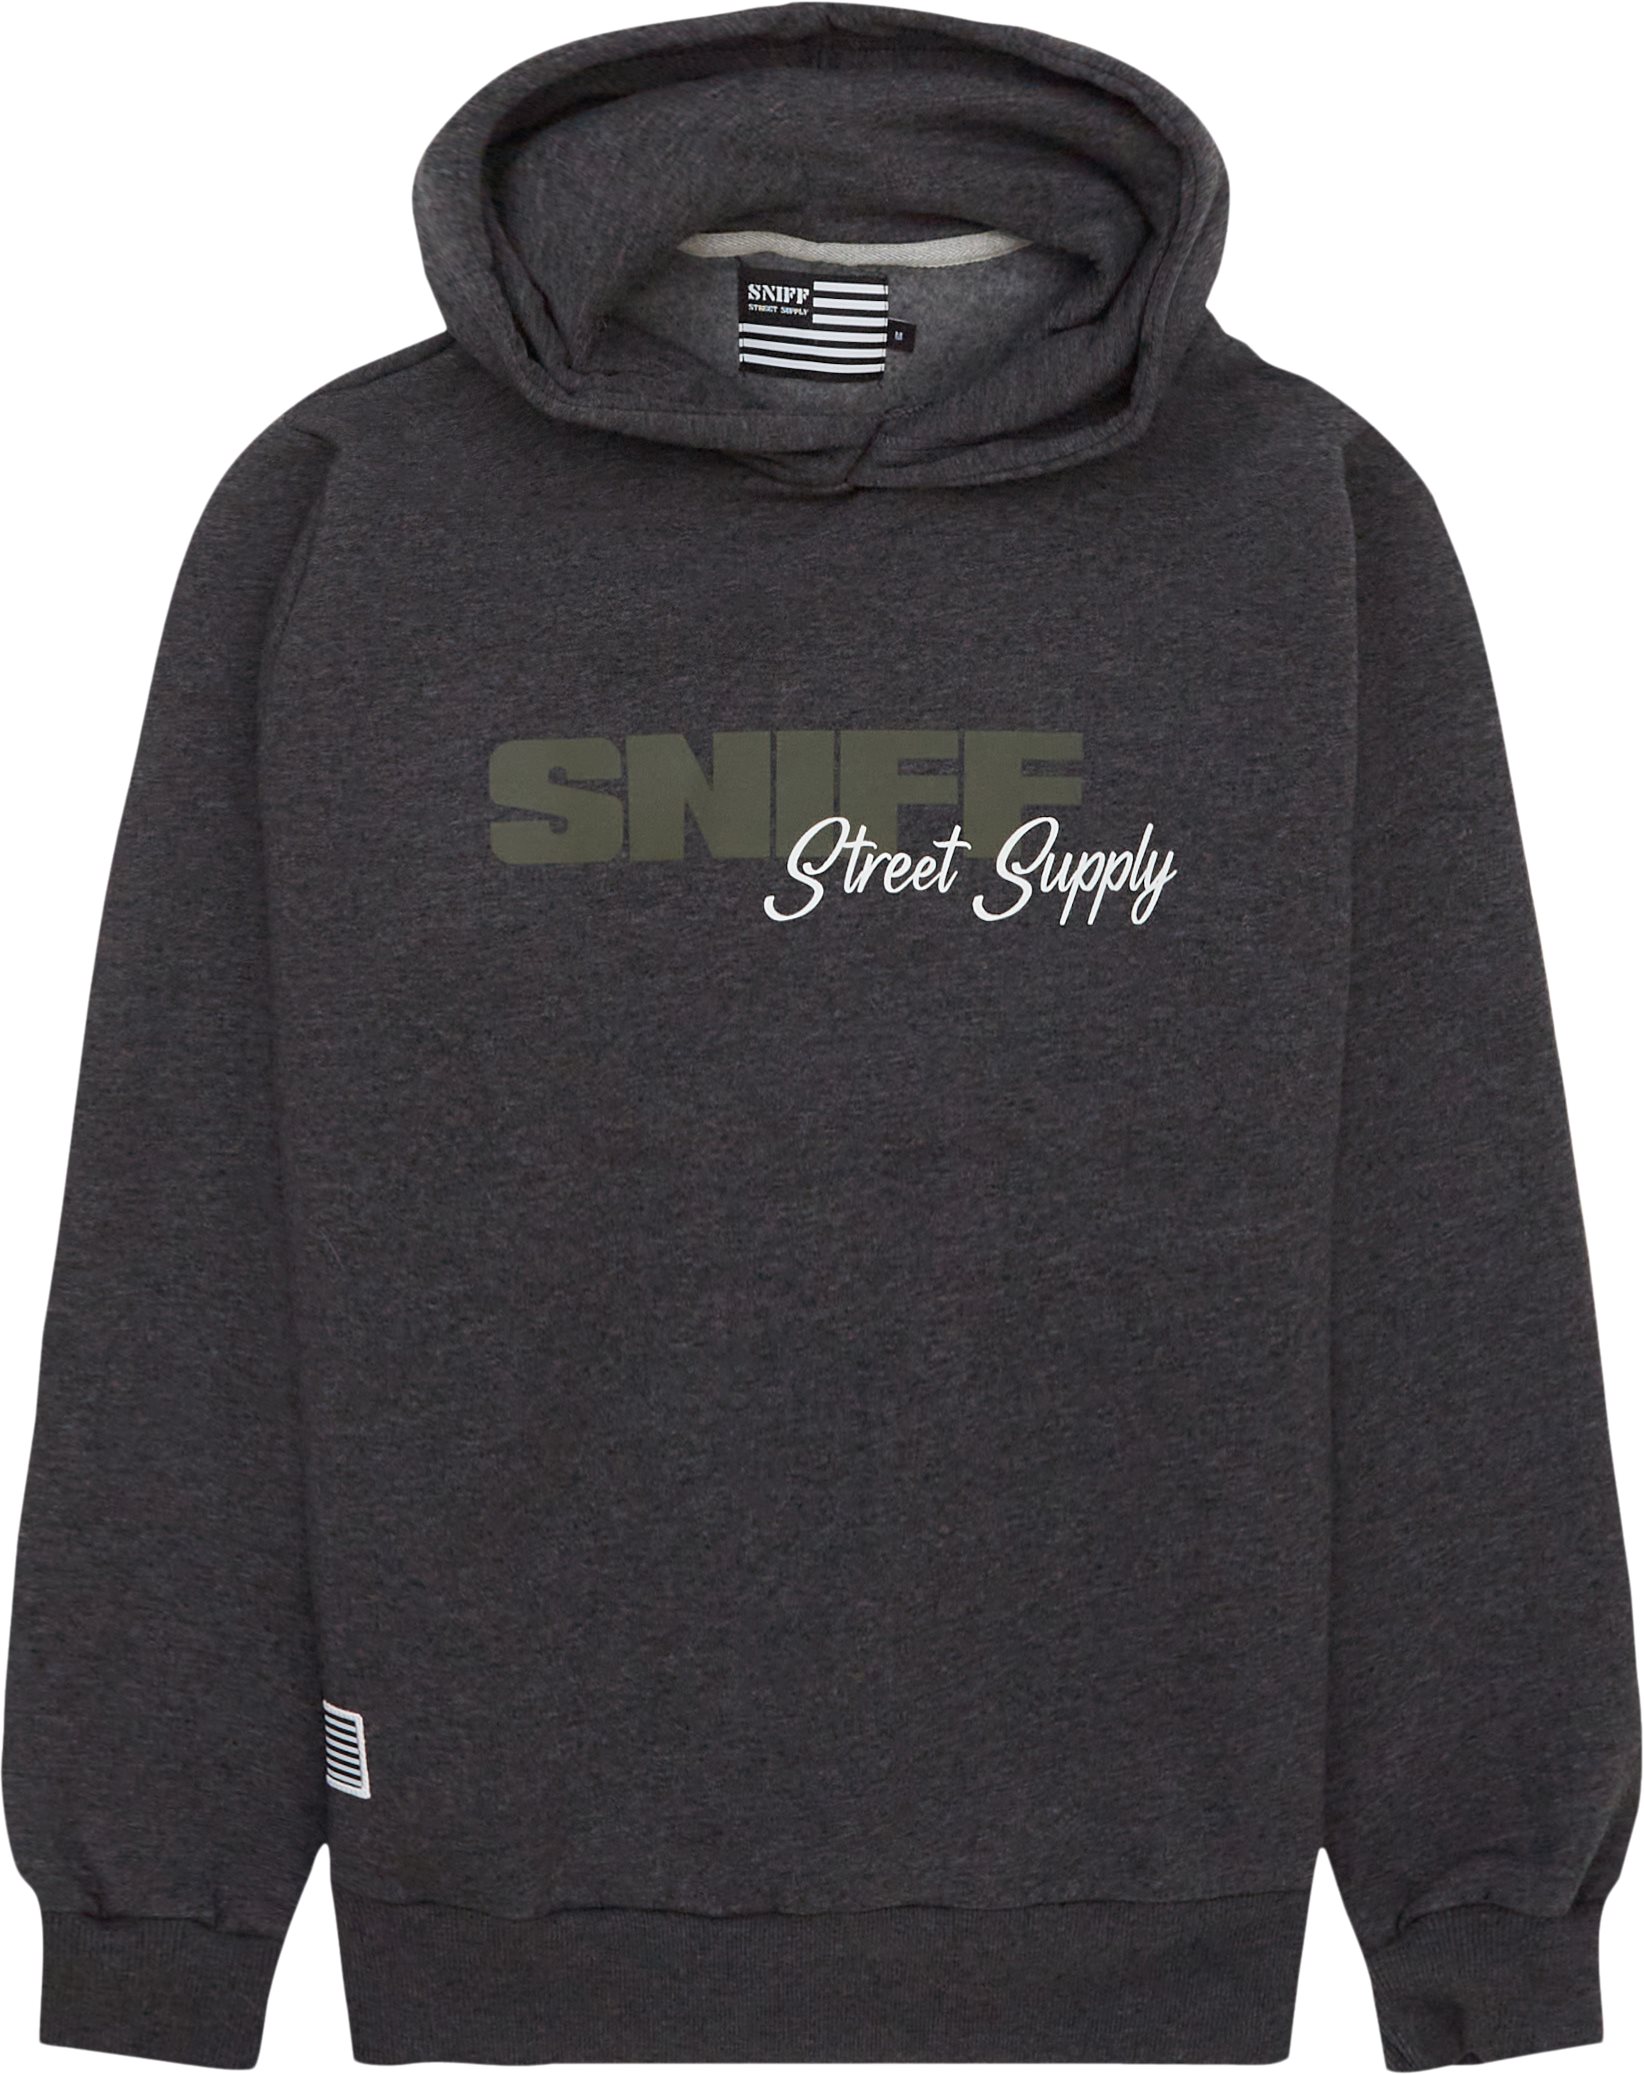 Sniff Sweatshirts CAVIAR Grey